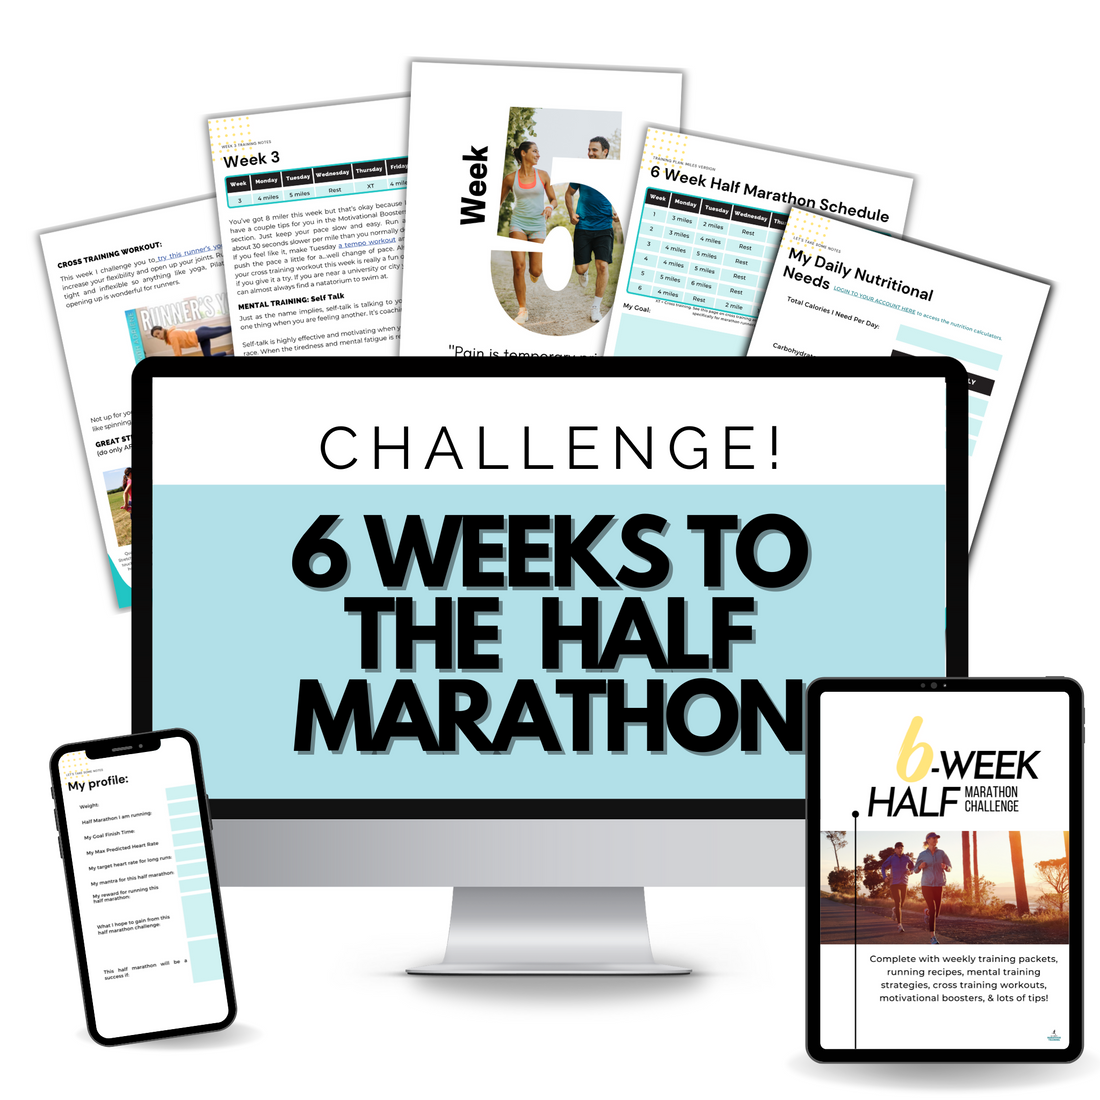 Mockup of the 6 week half marathon training schedule and challenge